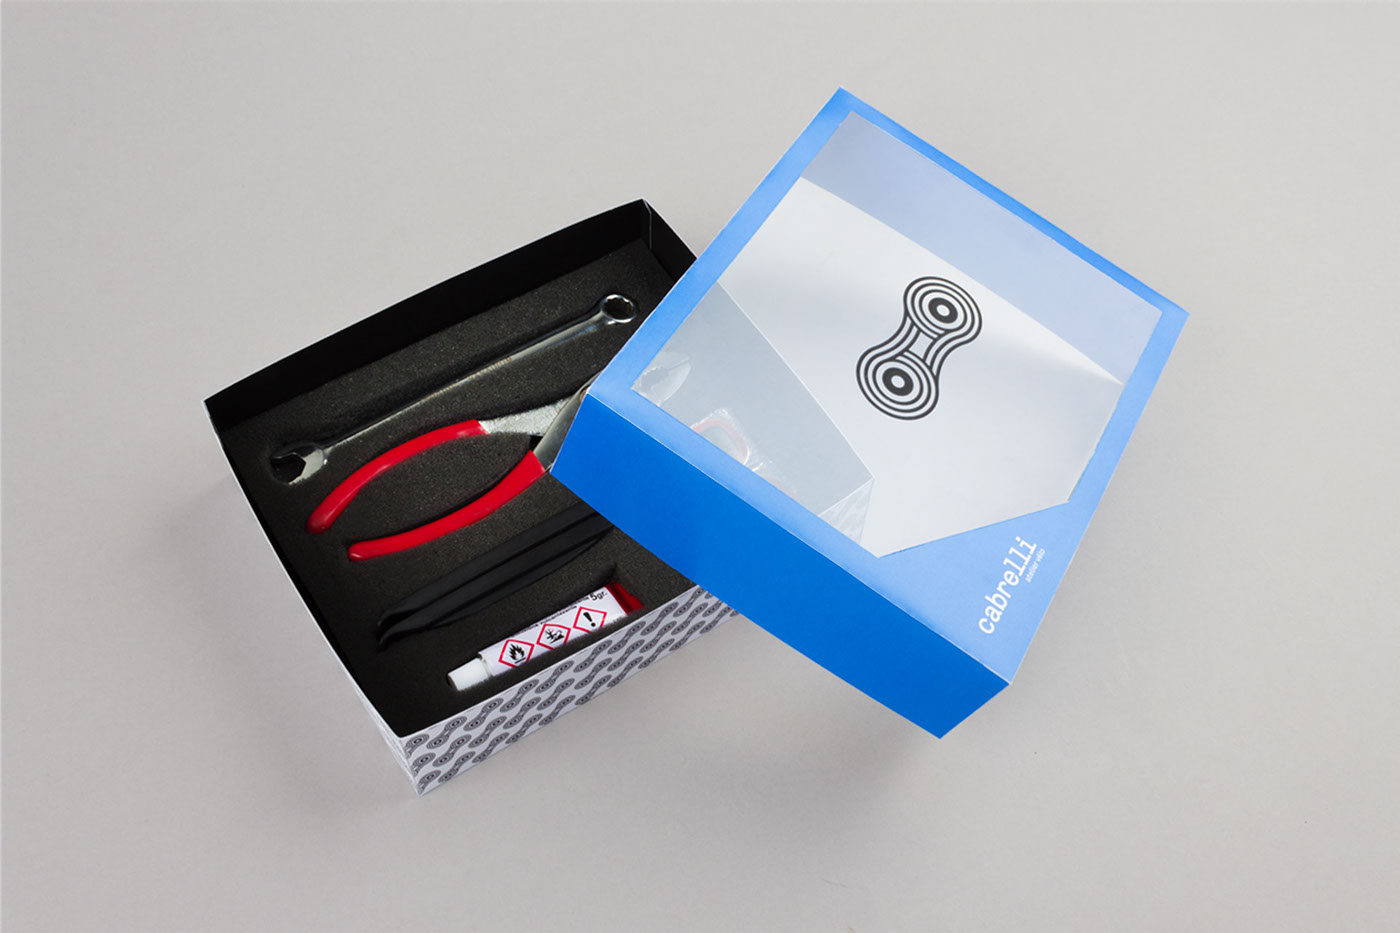 cabrelli identity brand Bike shop blue package minimal logo Stationery cycle Mockup Packaging Geneva Switzerland